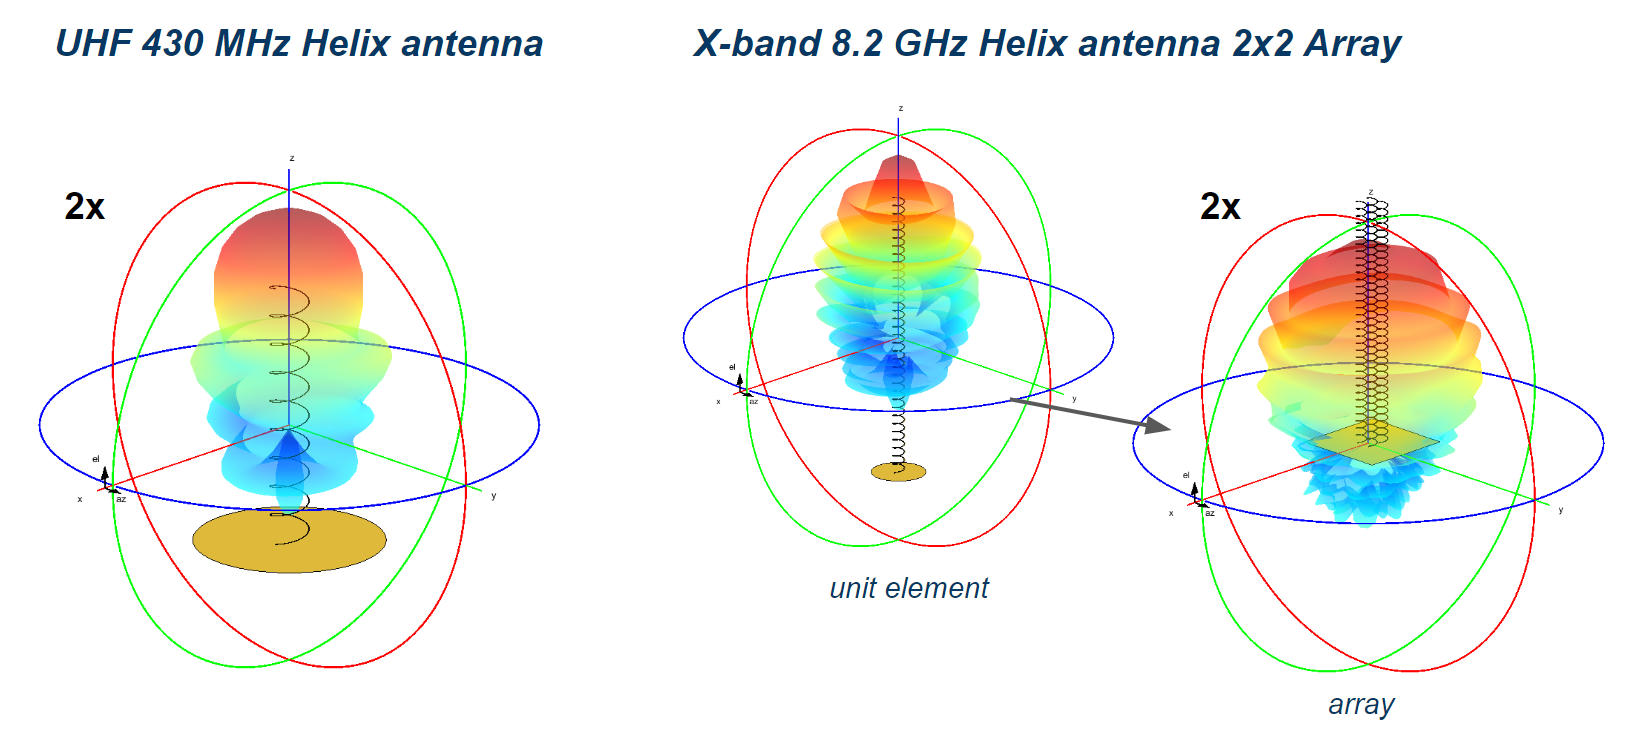 cdhs_antennas.png